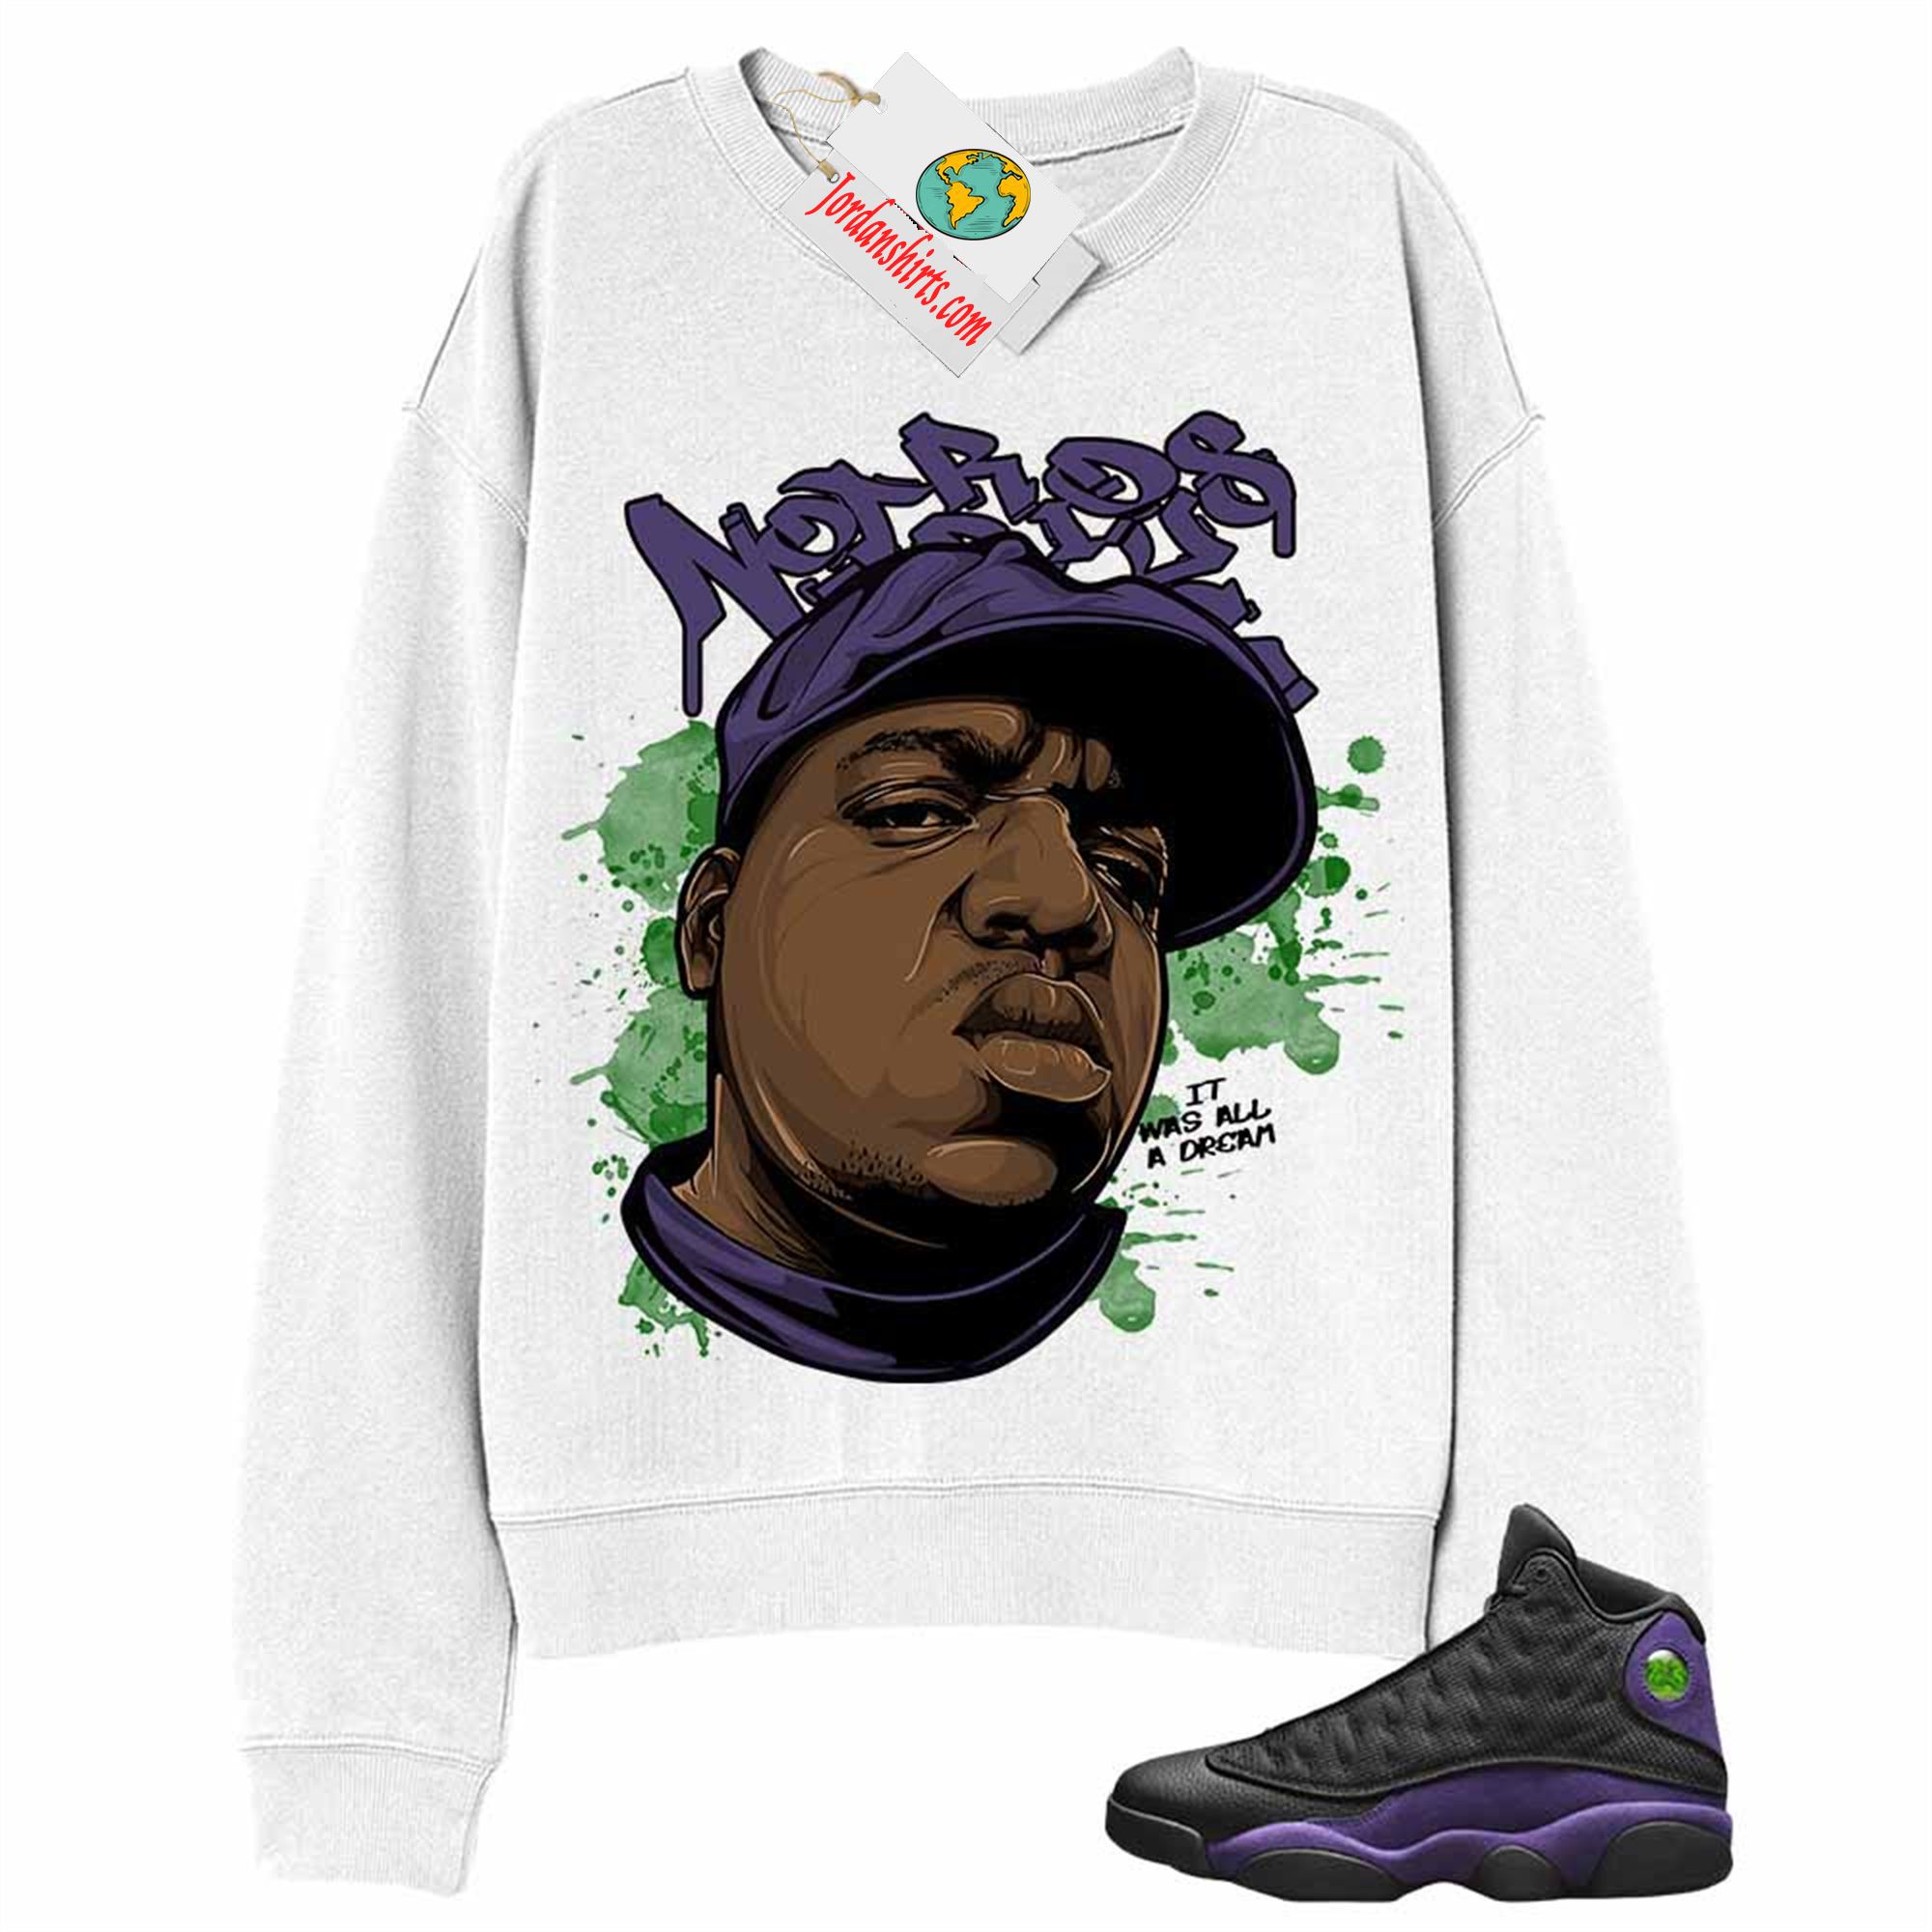 Jordan 13 Sweatshirt, Notorious Big White Sweatshirt Air Jordan 13 Court Purple 13s Plus Size Up To 5xl